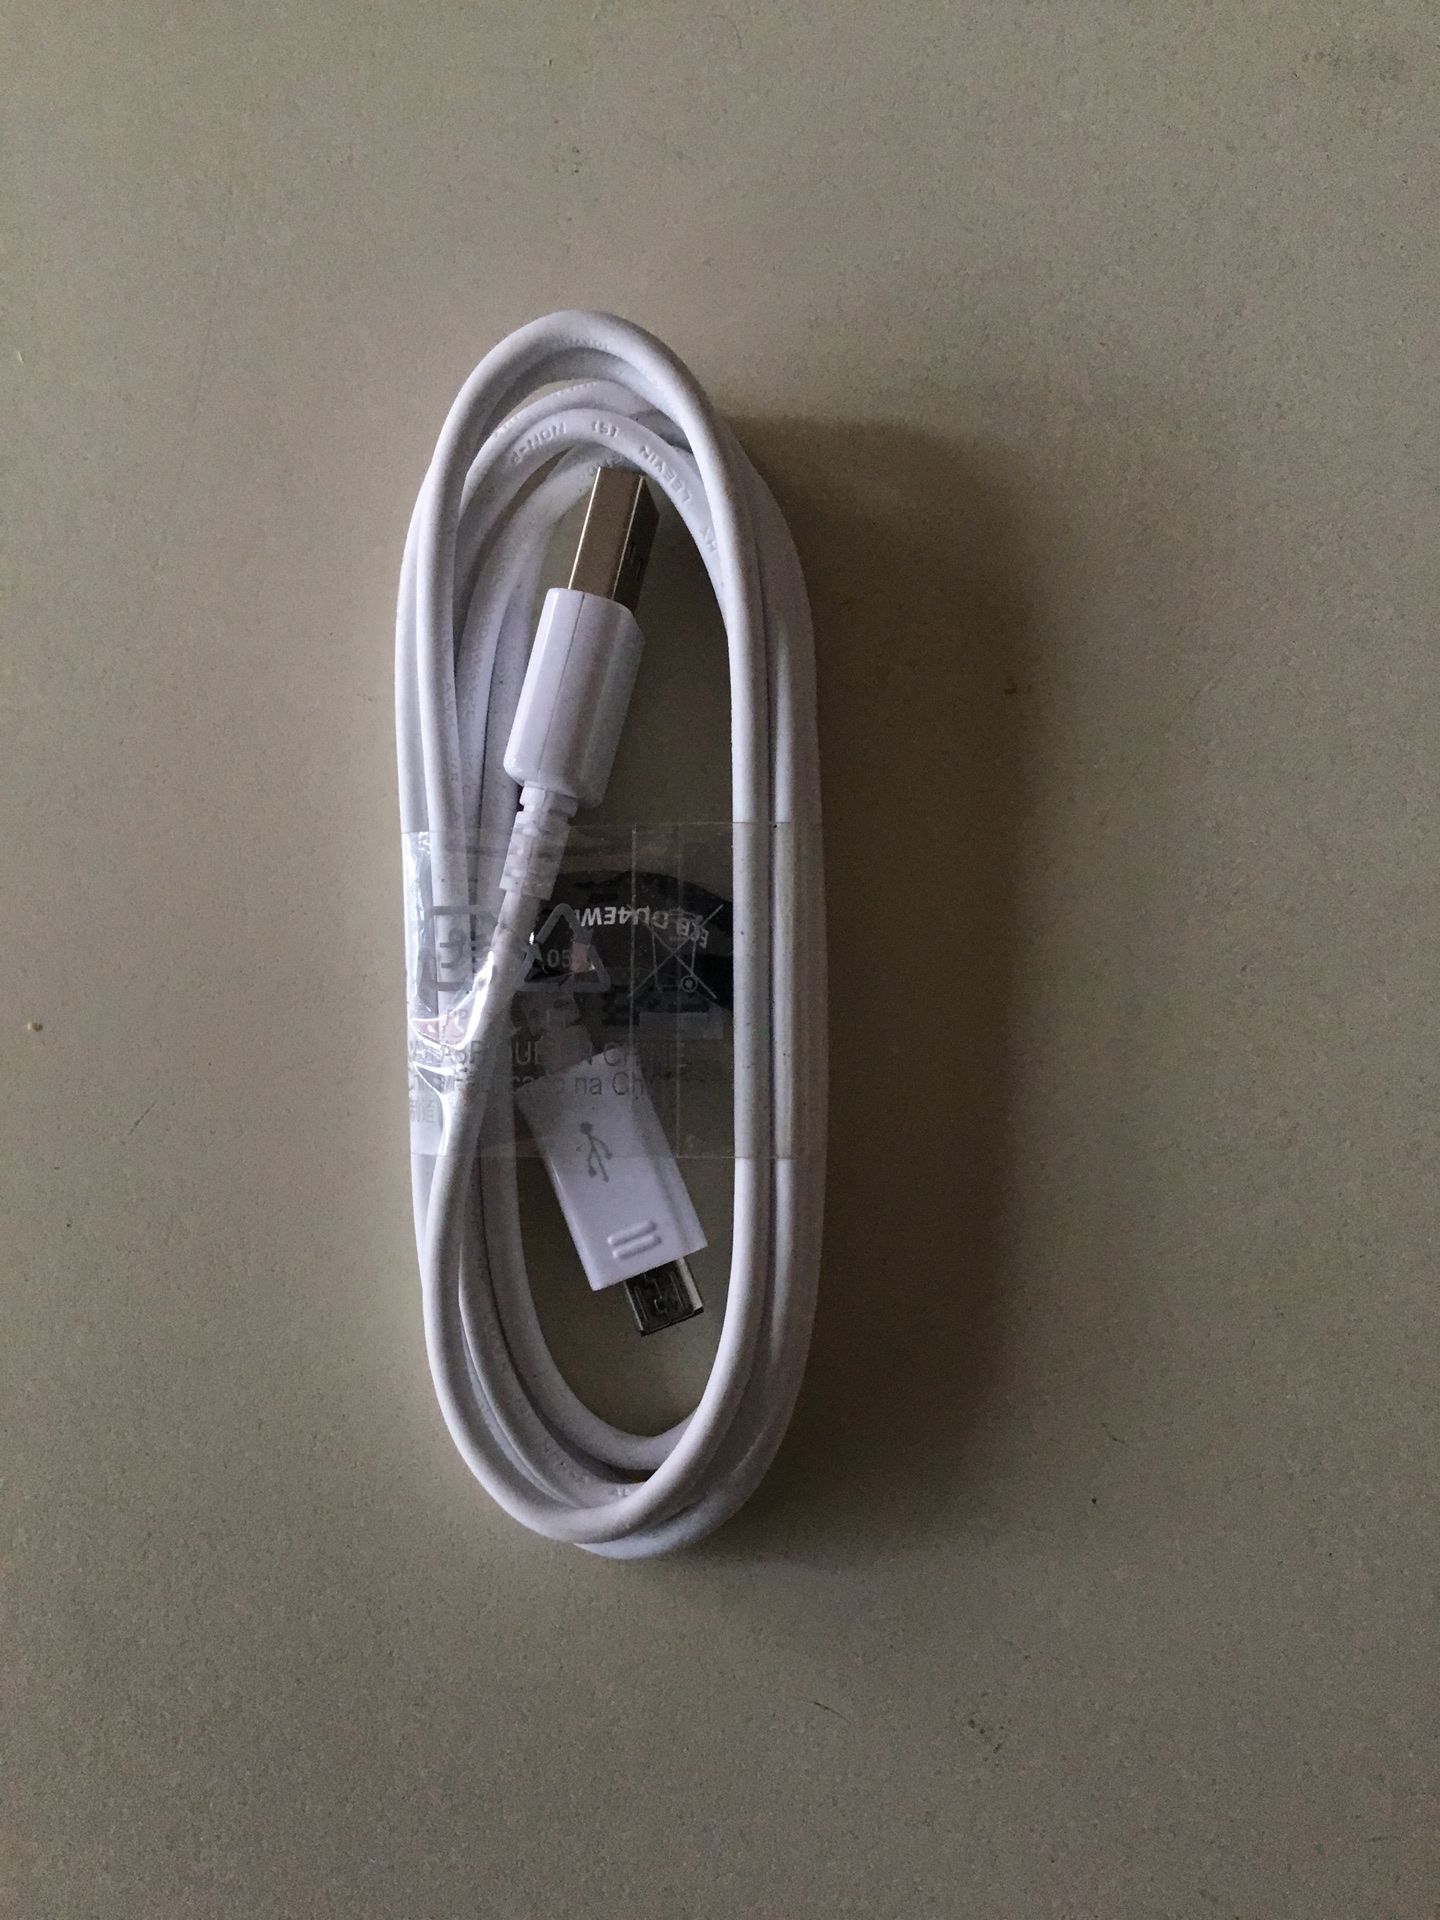 Micro USB cord.